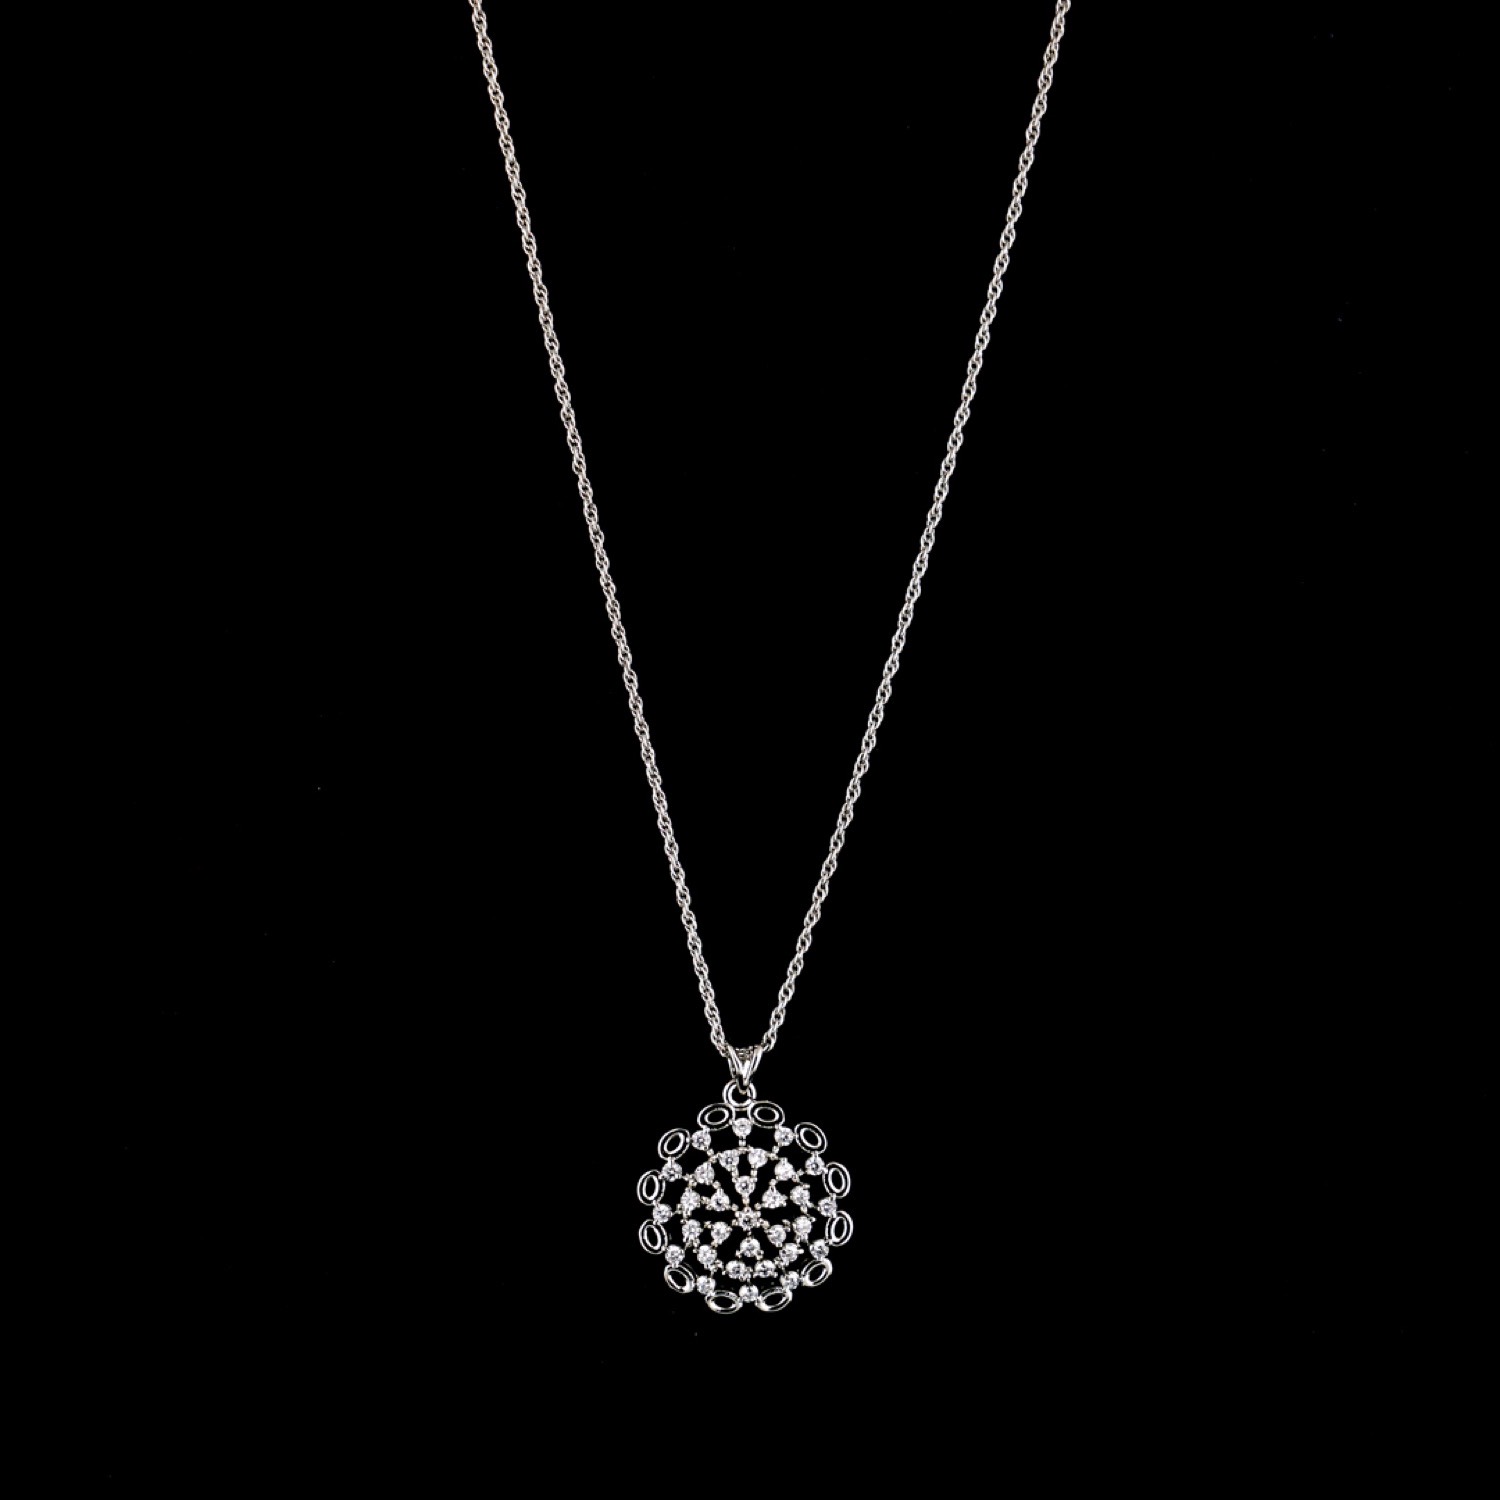 varam_chains_white_stone_chakra_design_pendant_with_silver_chain-1